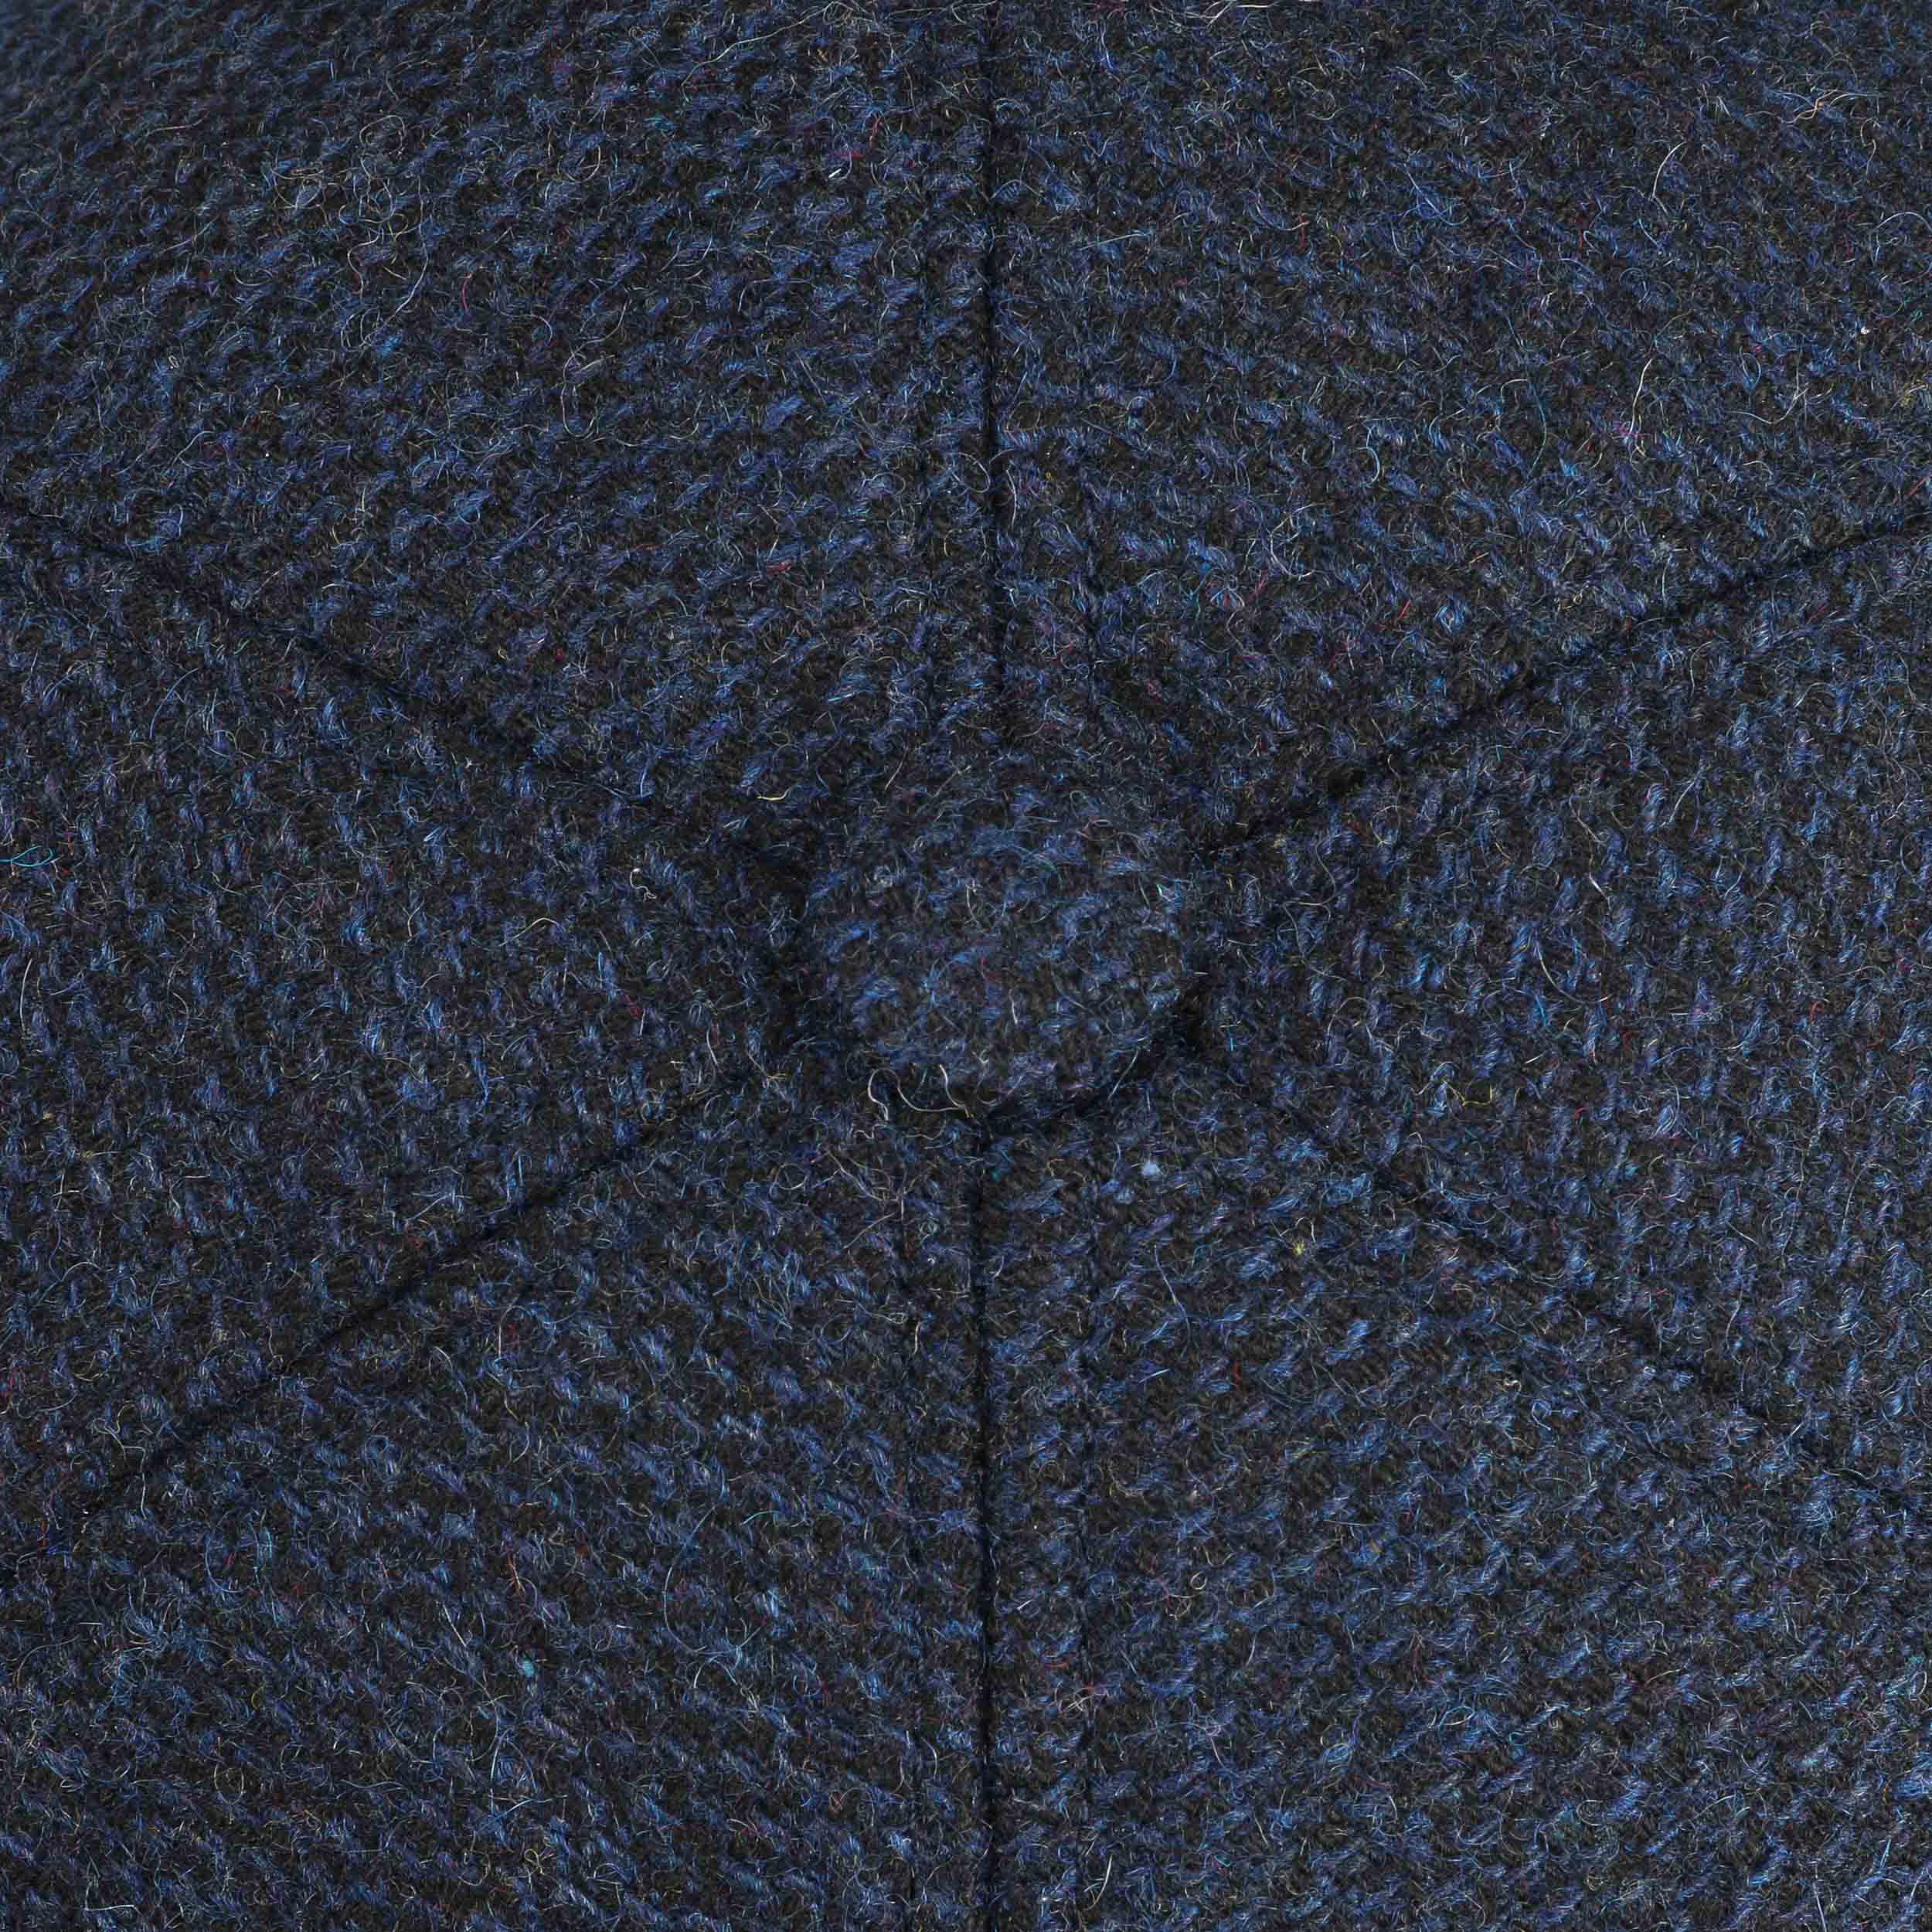 Louis Vuitton LV Made Stripe Flat Cap in Brown - MEN - Accessories MP3265 -  $87.40 